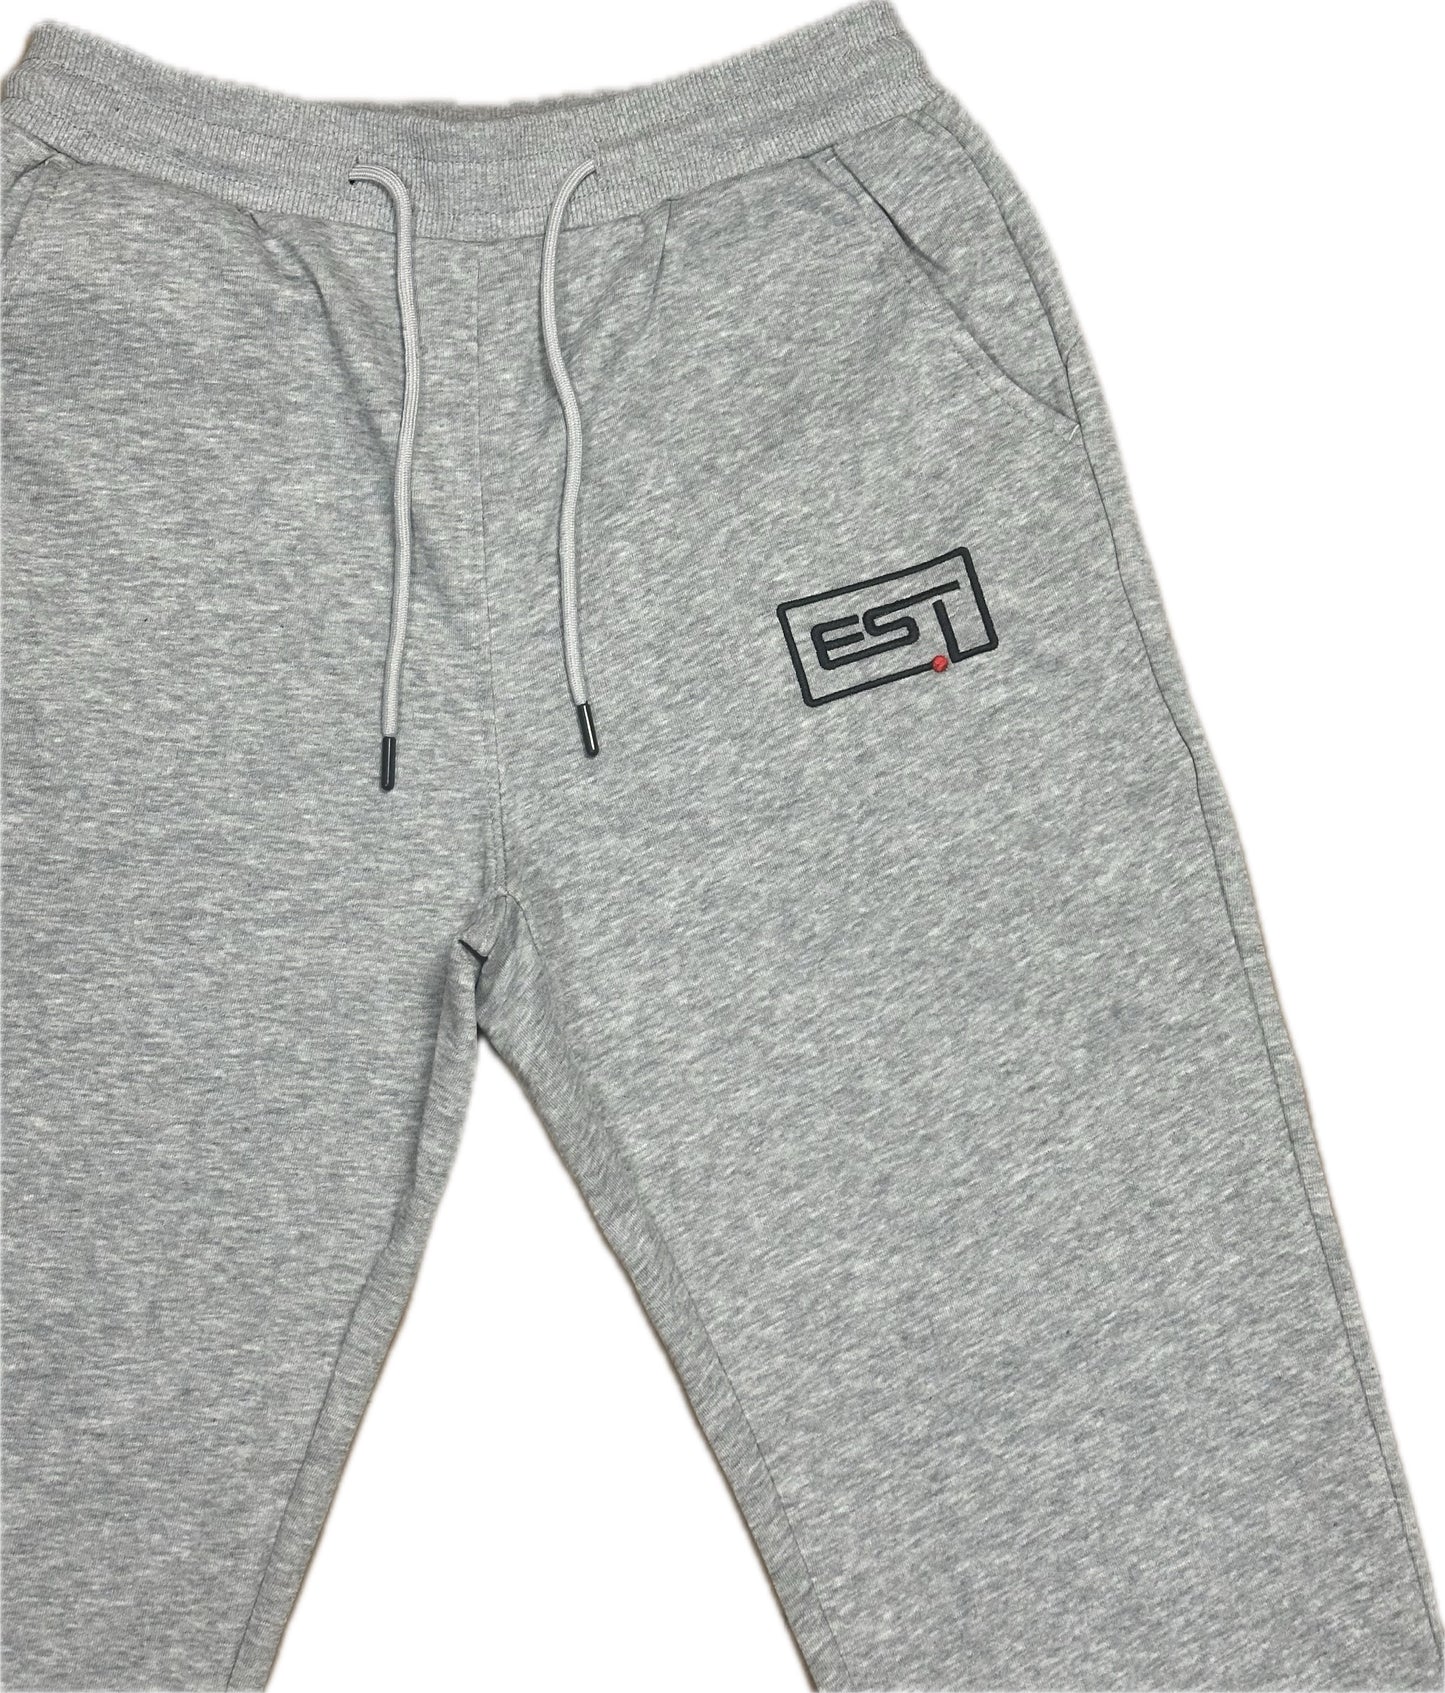 Grey EST Track Pants